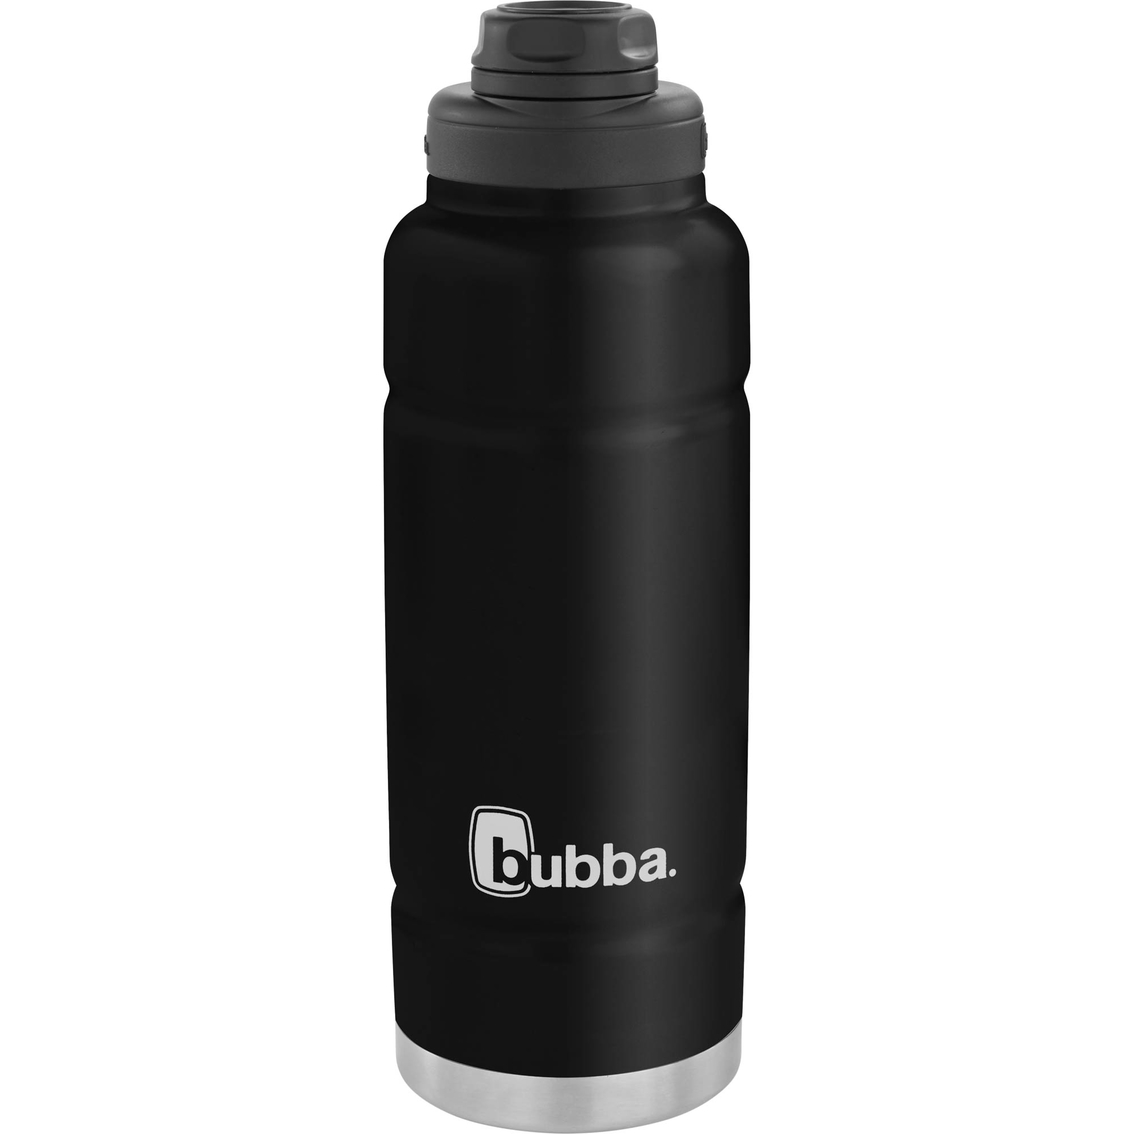 Bubba Trailblazer Stainless Steel Water Bottle 40 oz. - Image 1 of 4